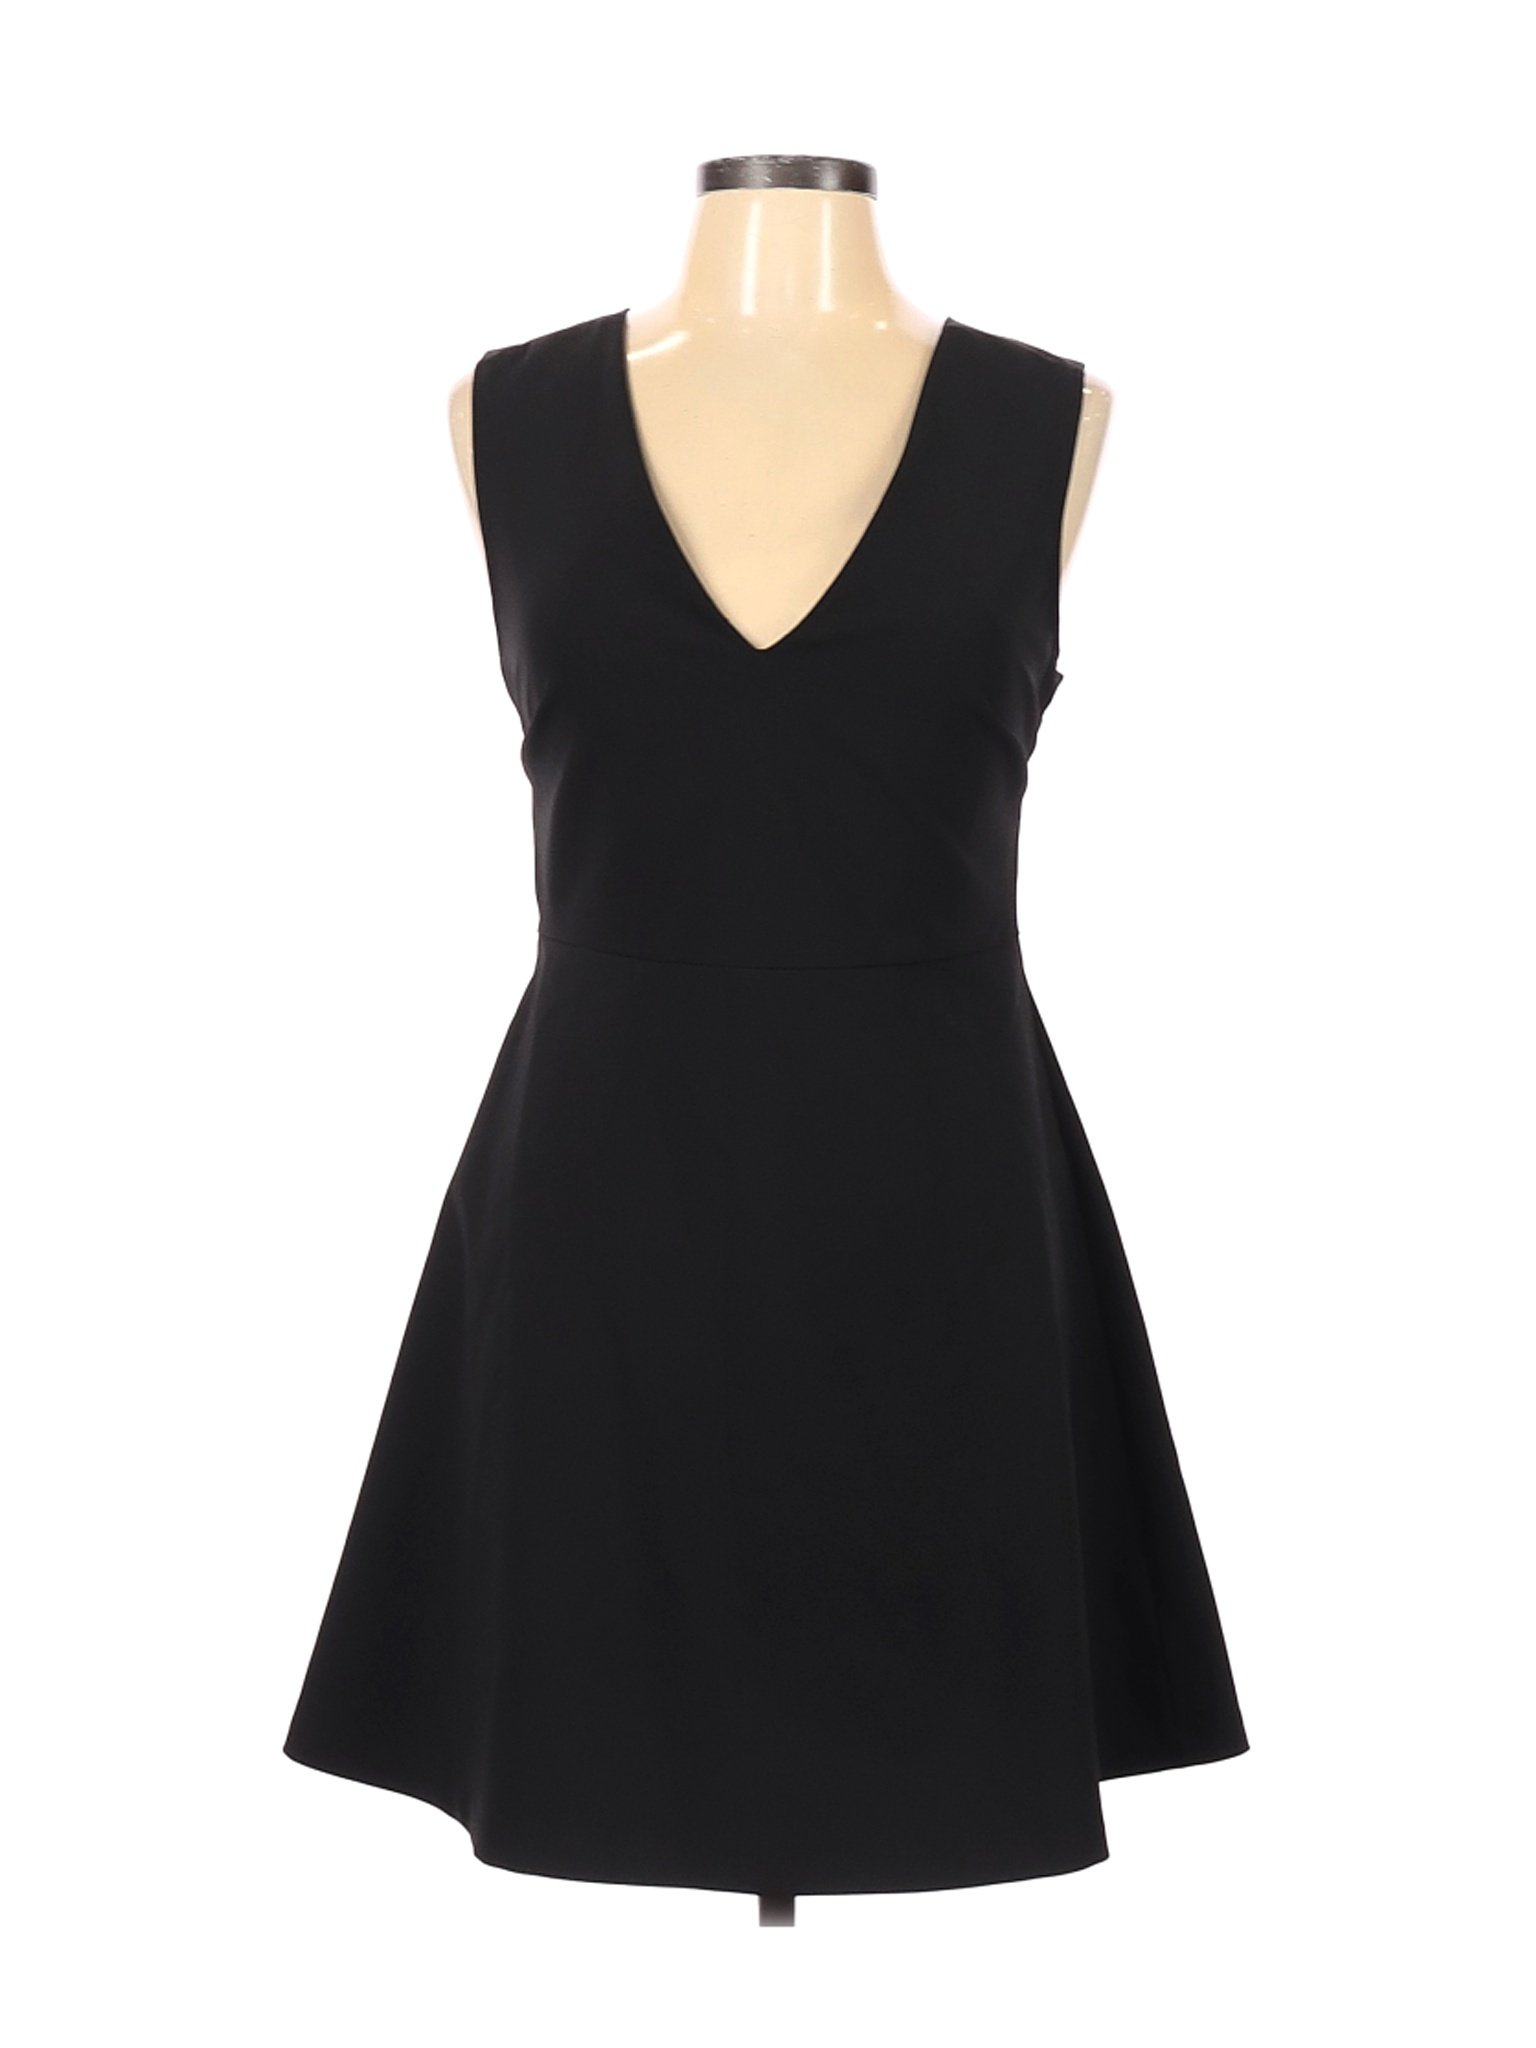 Zara Women Black Cocktail Dress L | eBay